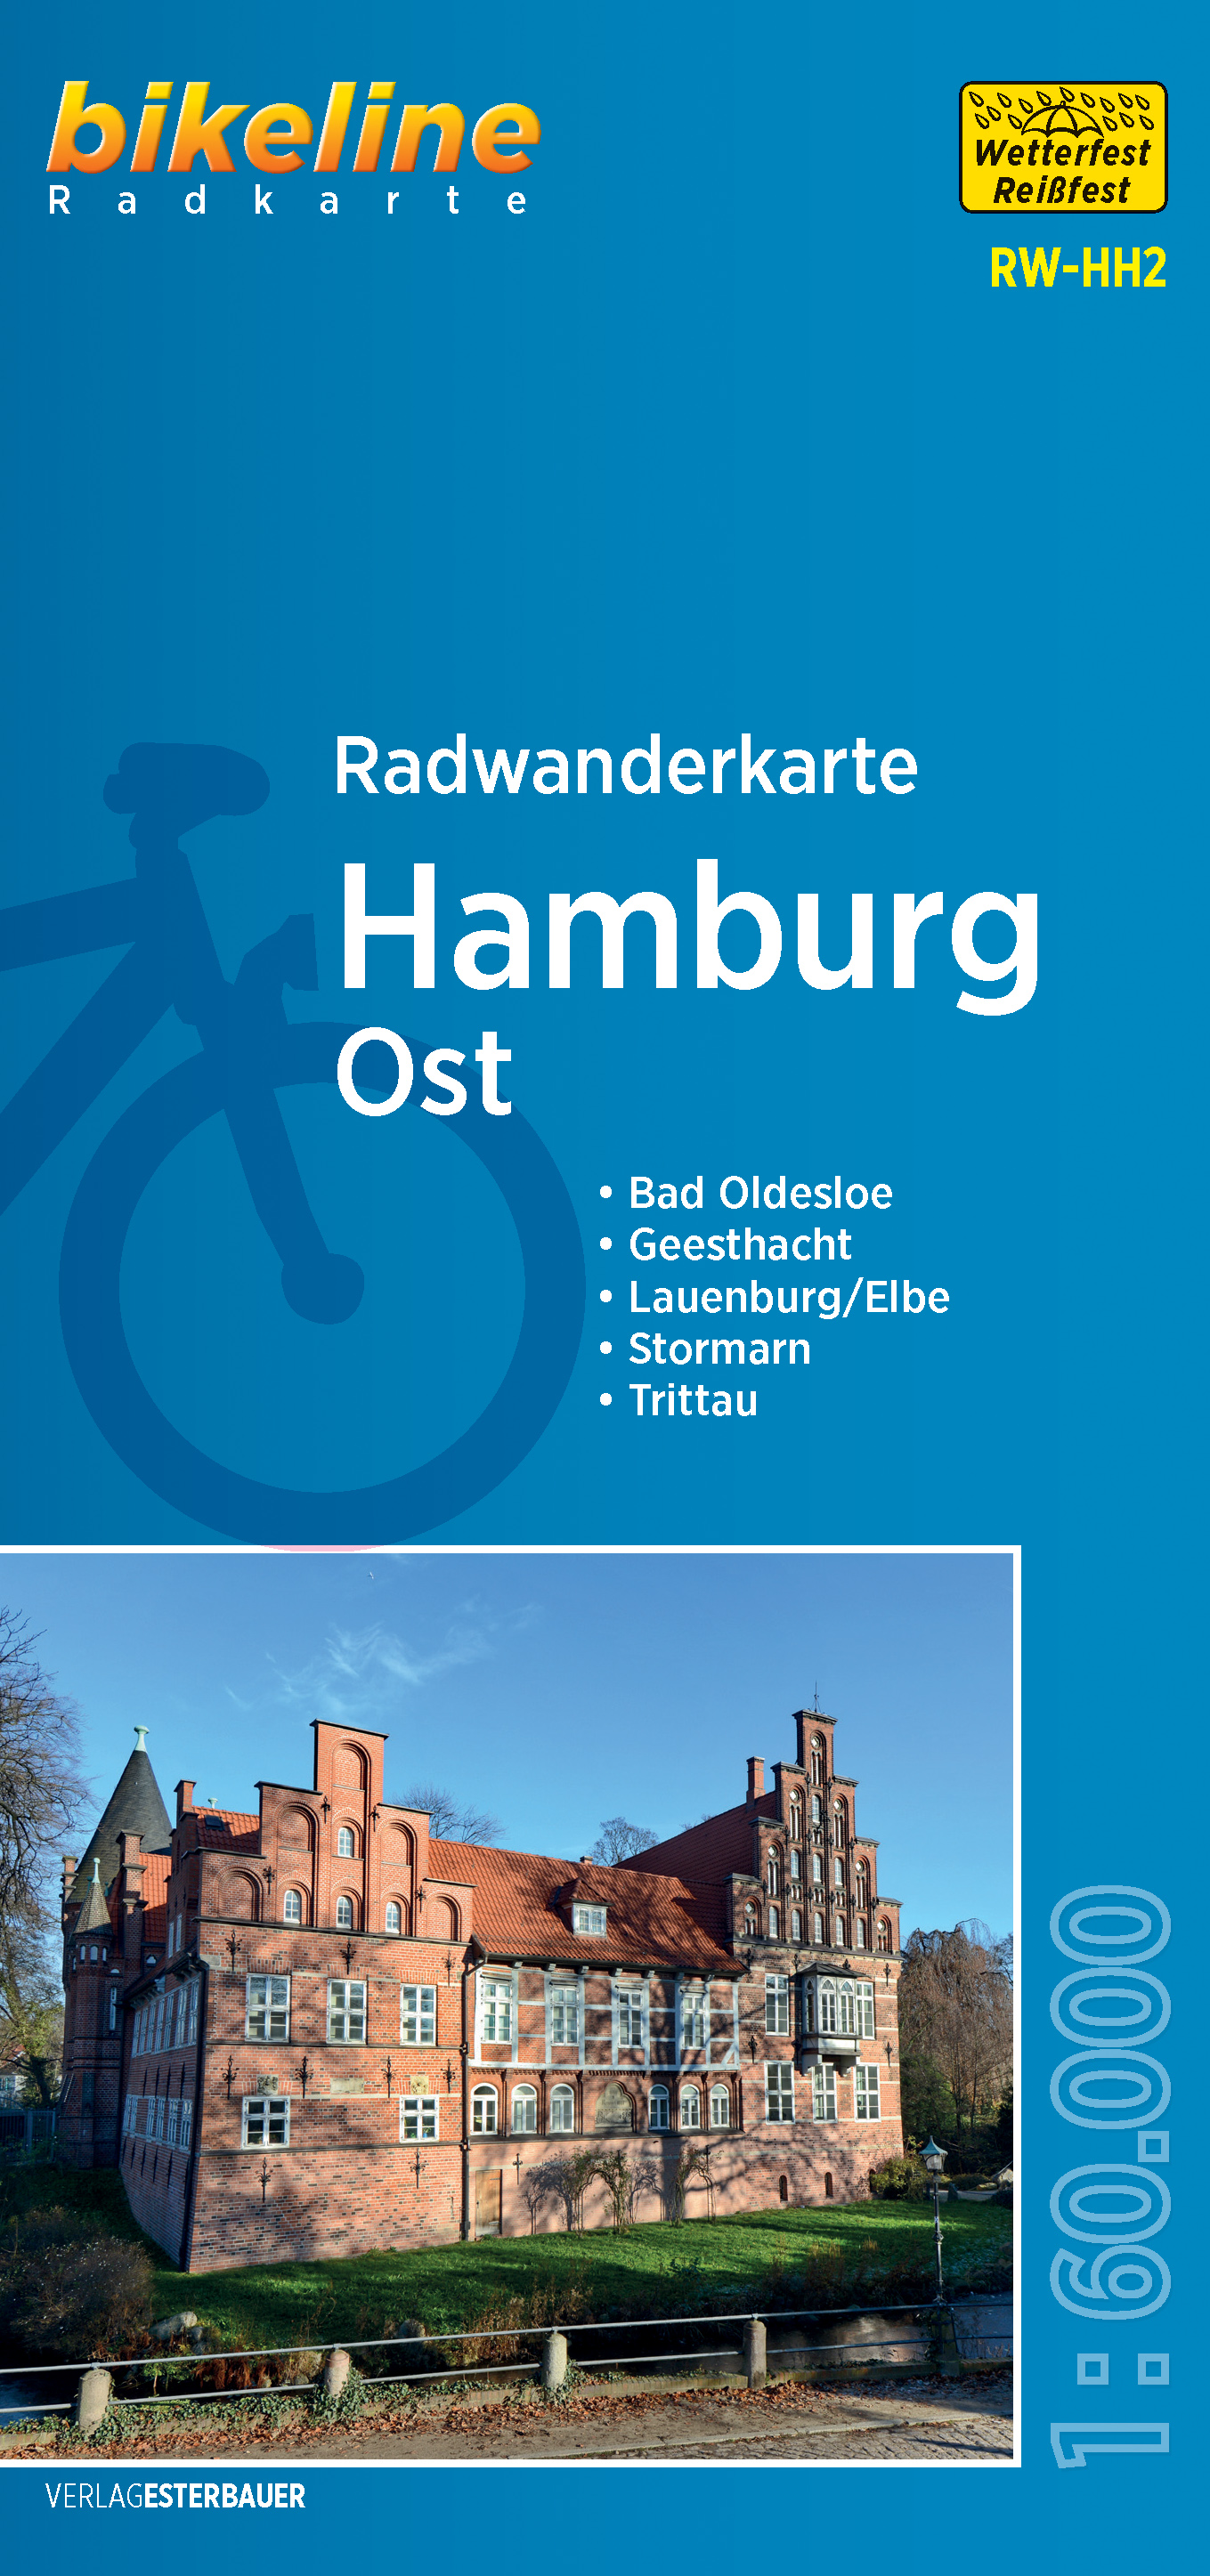 Online bestellen: Fietskaart RW-HH2 Bikeline Radkarte Hamburg Ost | Esterbauer